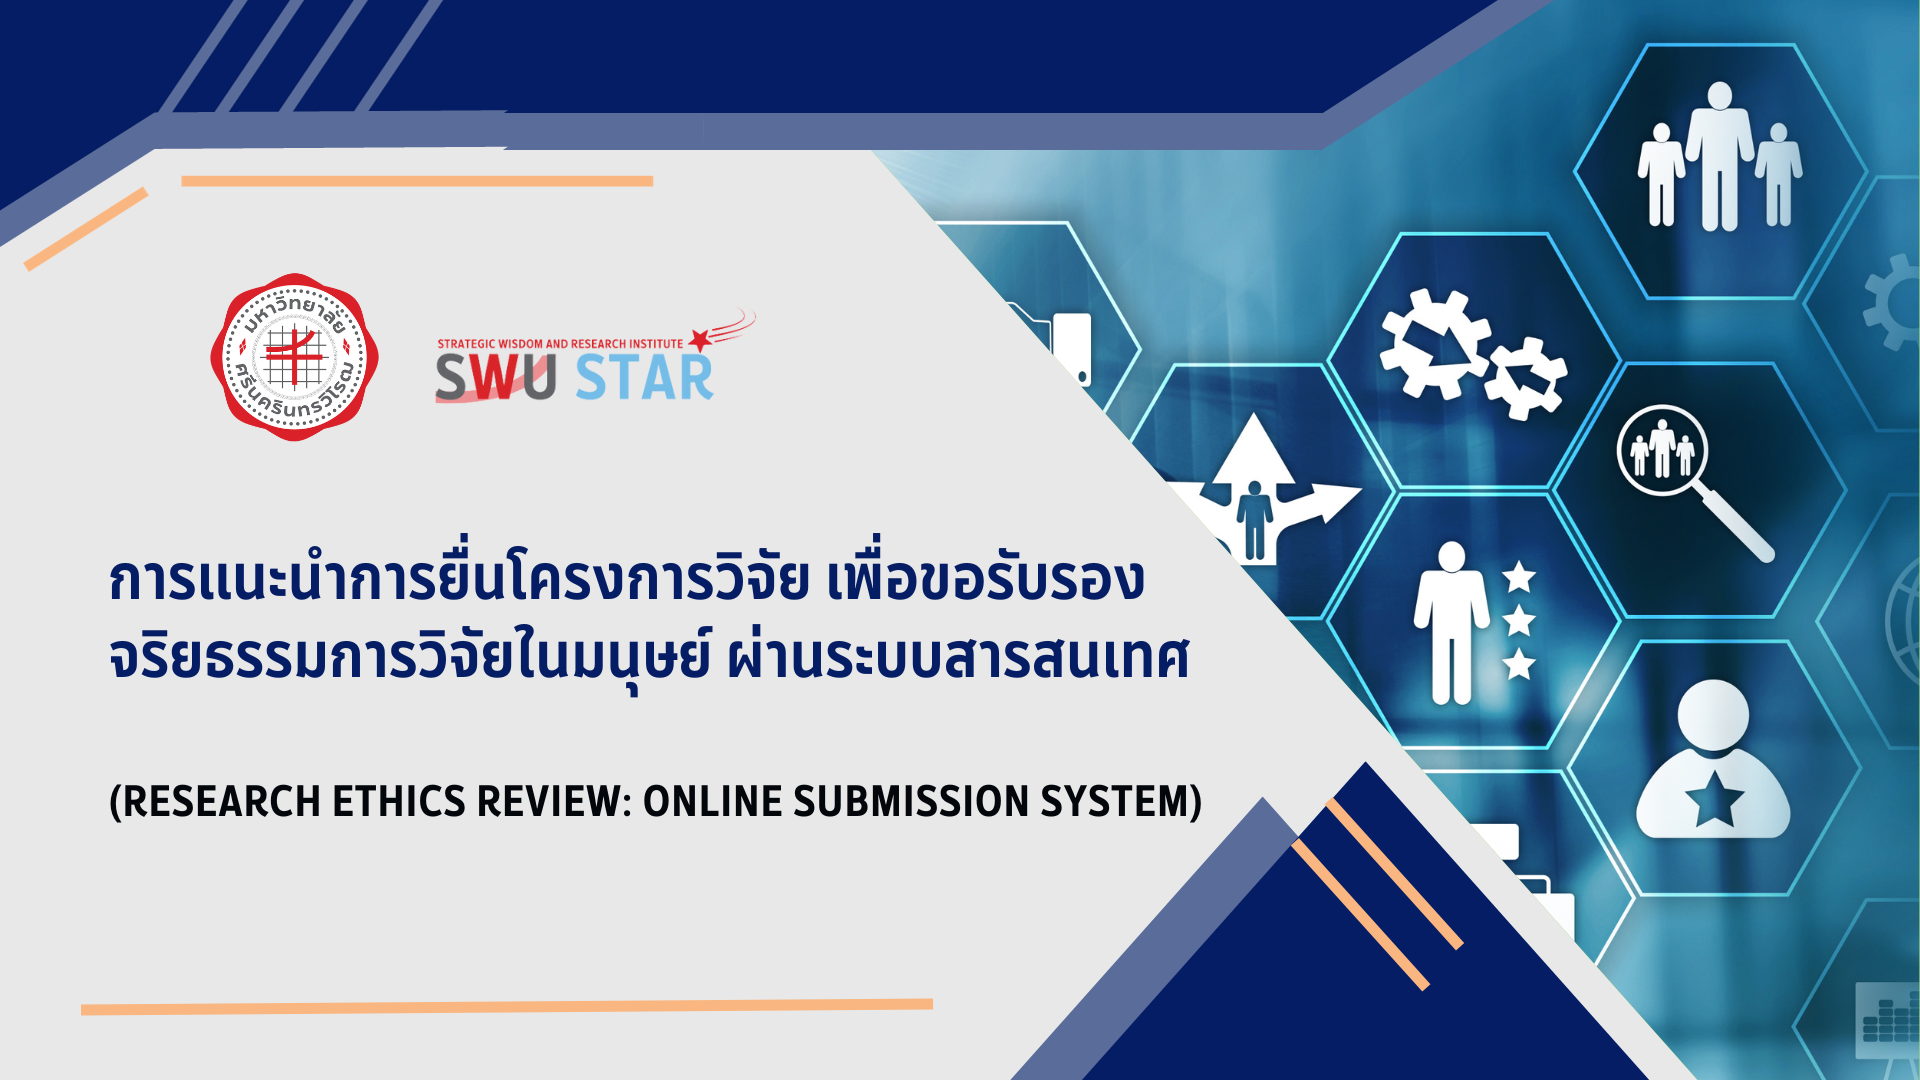 SWU STAR: การแนะนำการยื่นโครงการวิจัย เพื่อขอรับรองจริยธรรมการวิจัยในมนุษย์ ผ่านระบบสารสนเทศ (Research Ethics Review: Online Submission System)